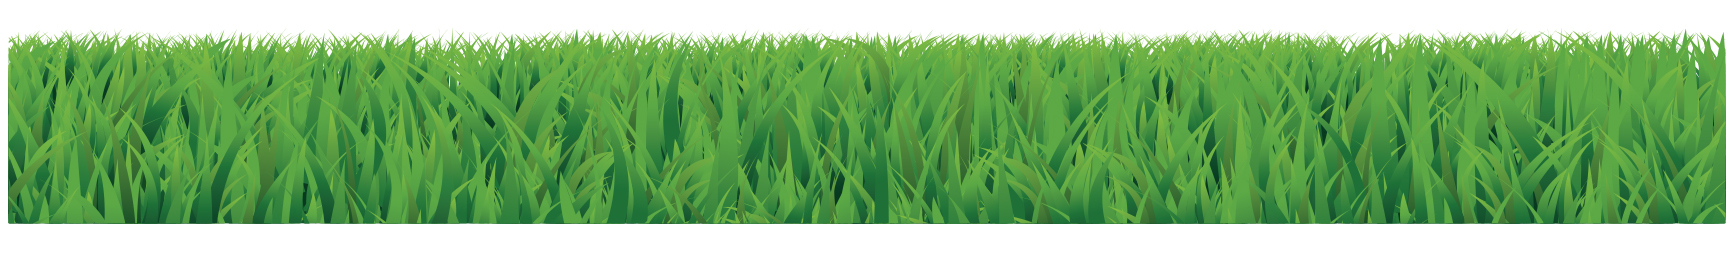 Pro_Grass